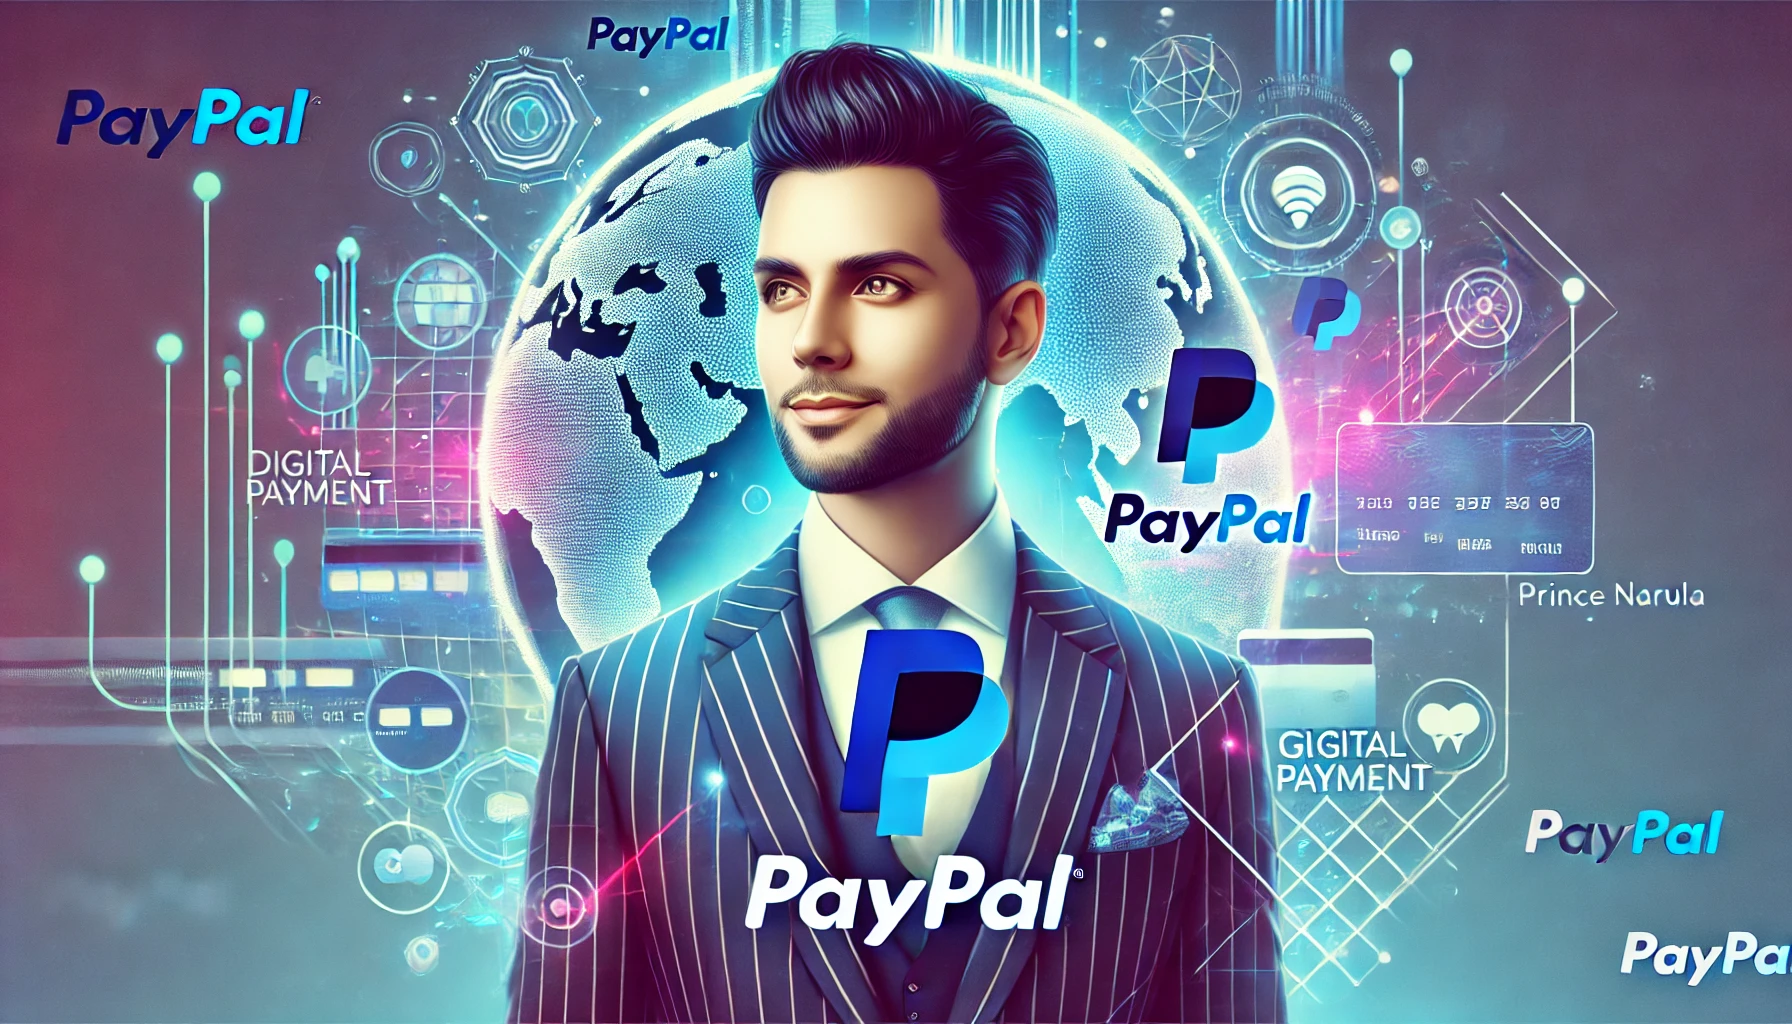 Prince Narula and Digital PayPal: A Synergistic Partnership